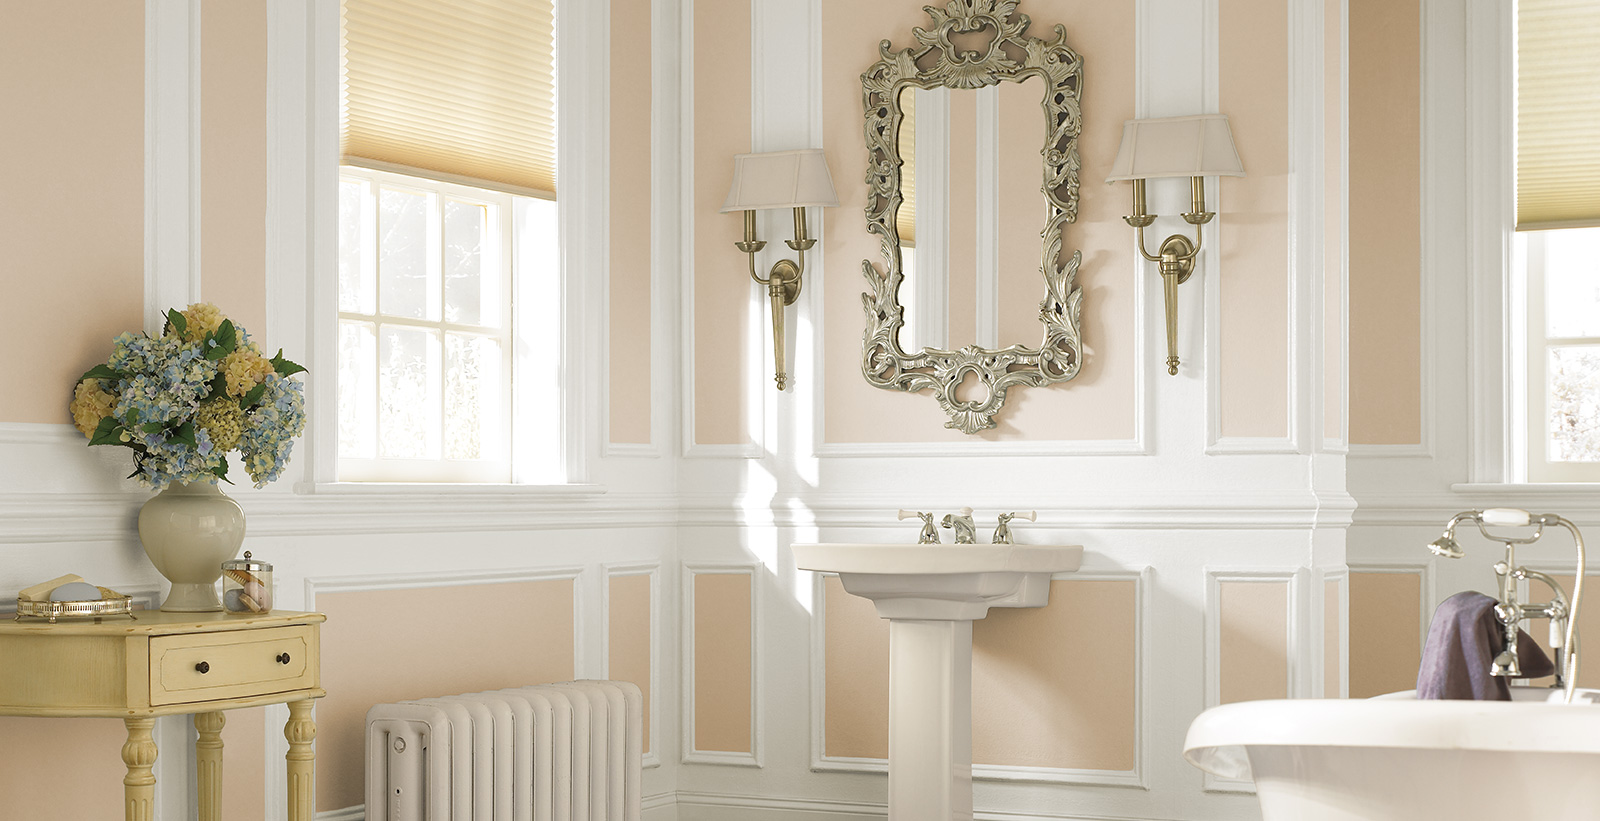 Inviting roman themed bathroom with orange walls, white trim, white sink, and rectangular mirror.